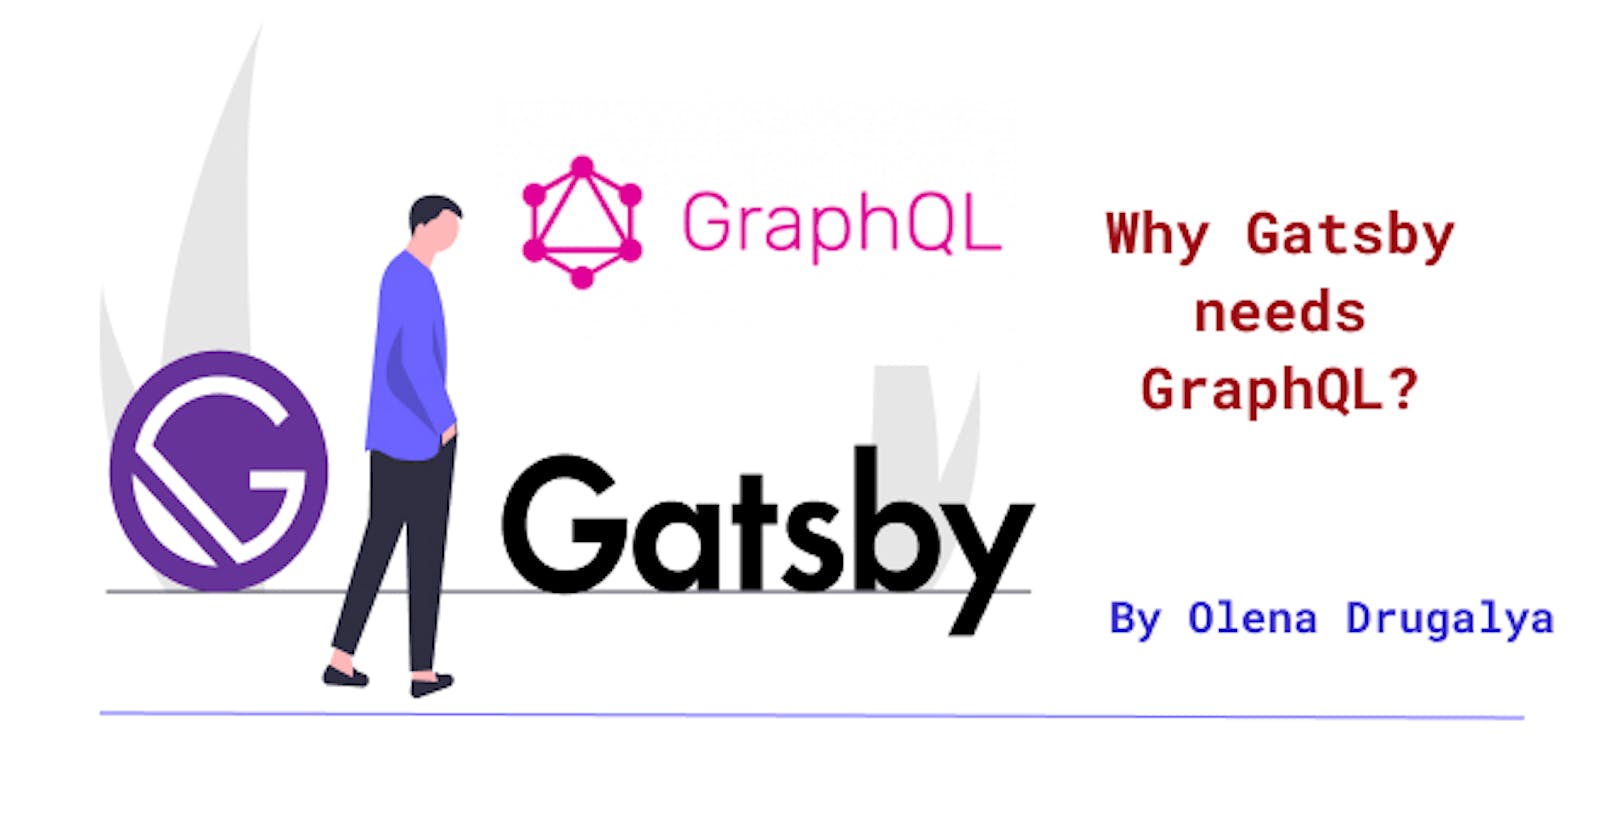 Why Gatsby needs GraphQL?